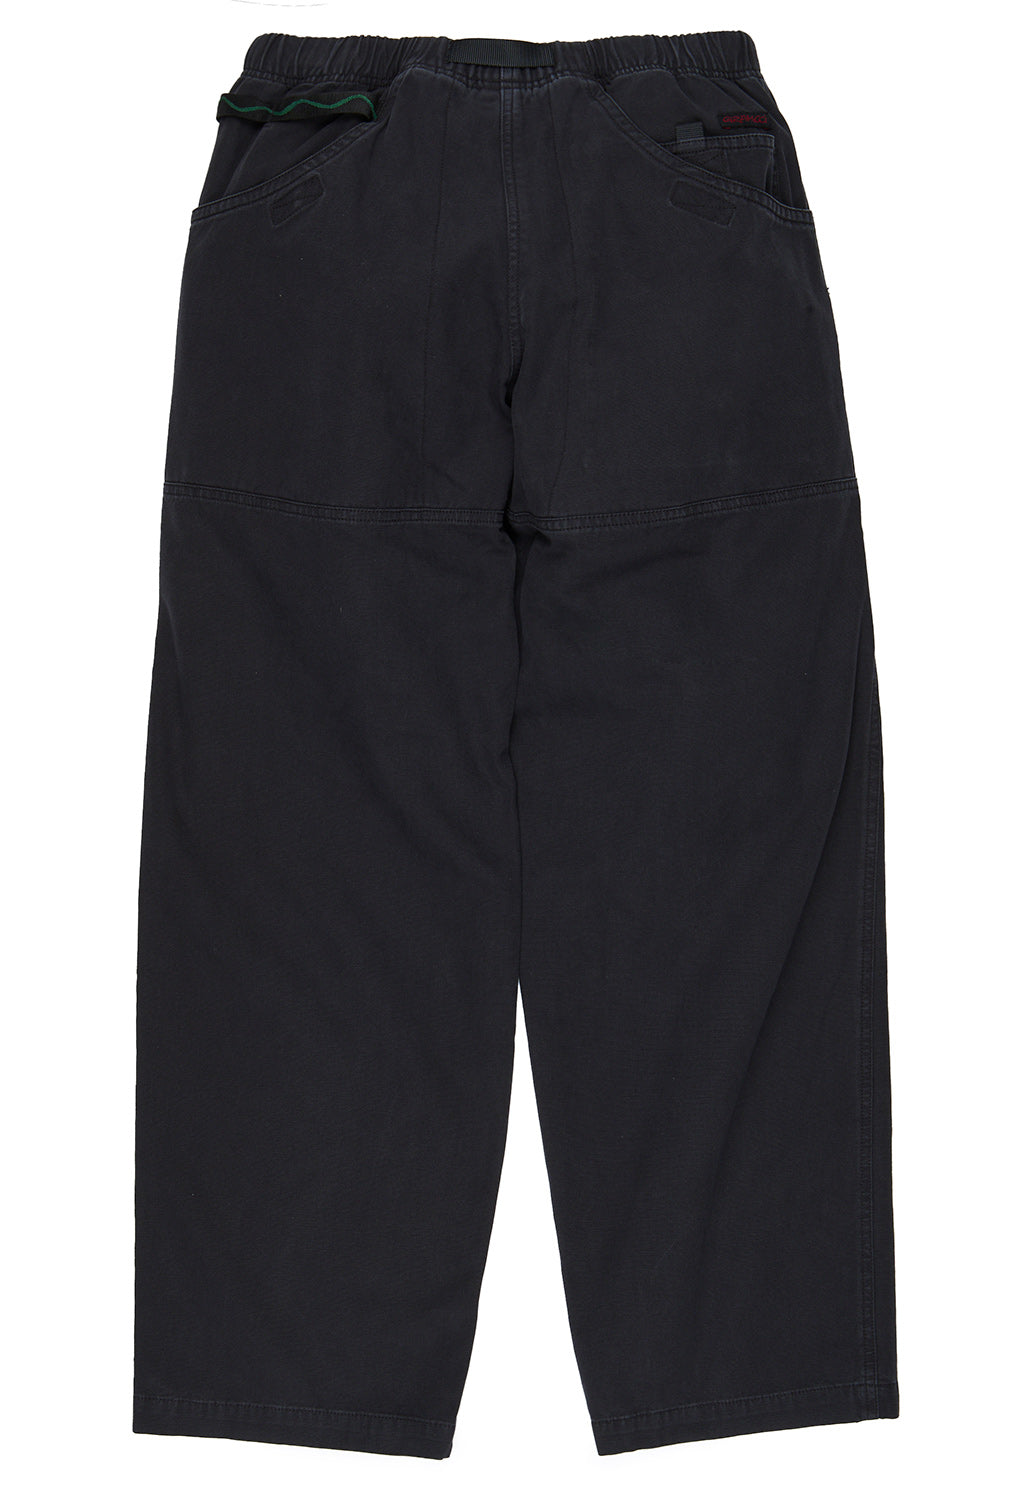 Gramicci Men's Canvas Equipment Pants - Dusty Black